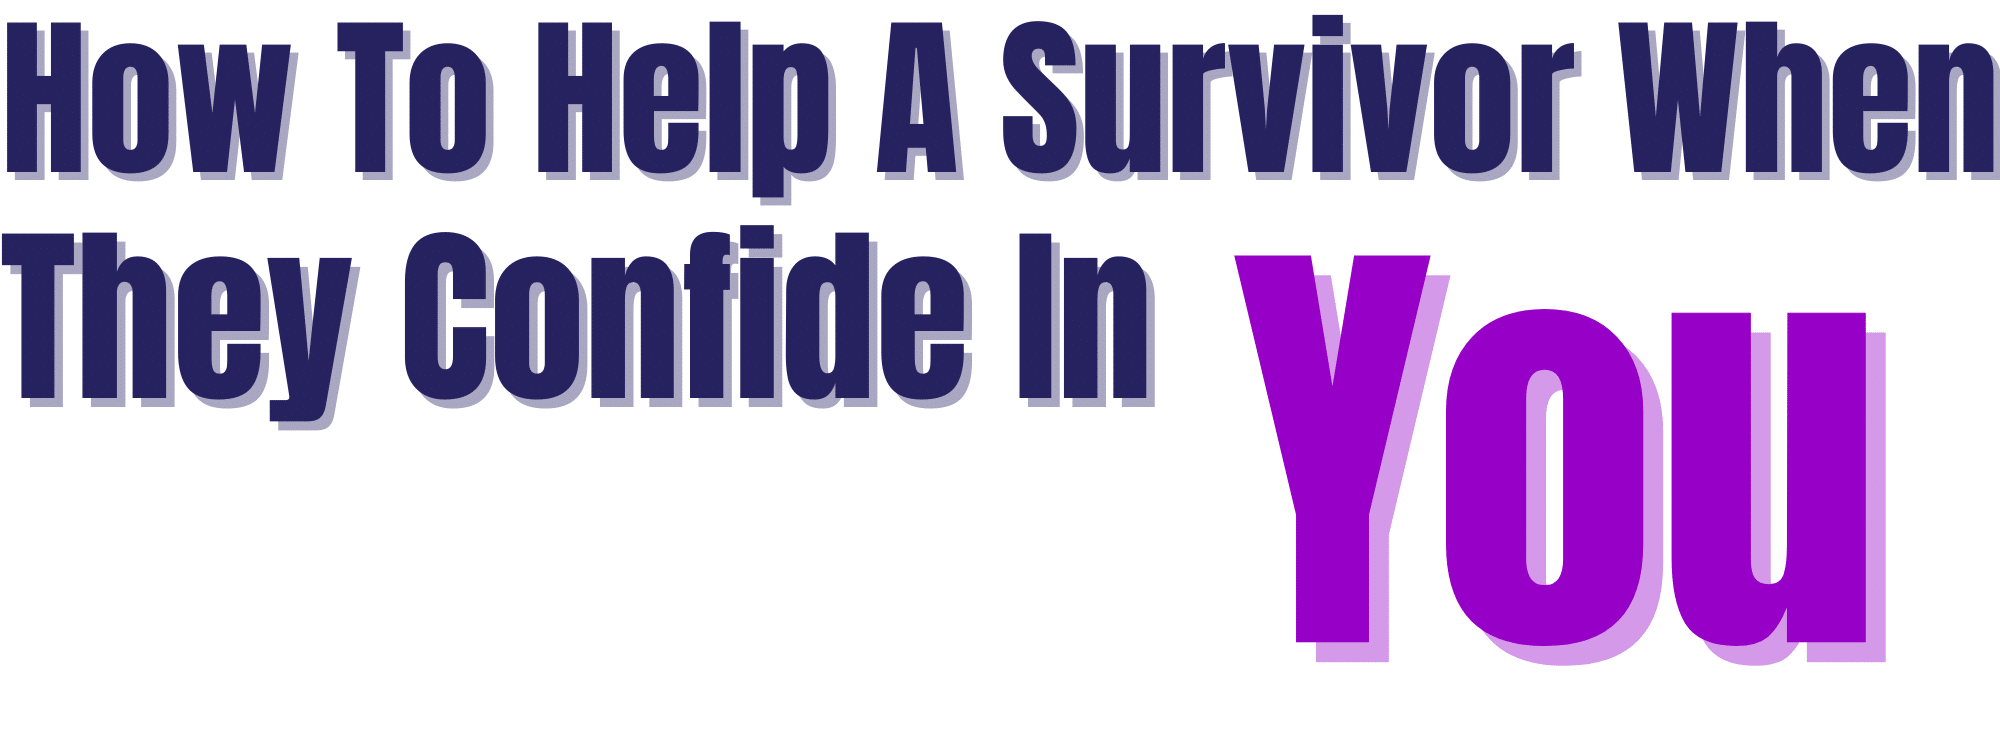 How To Help A Survivor